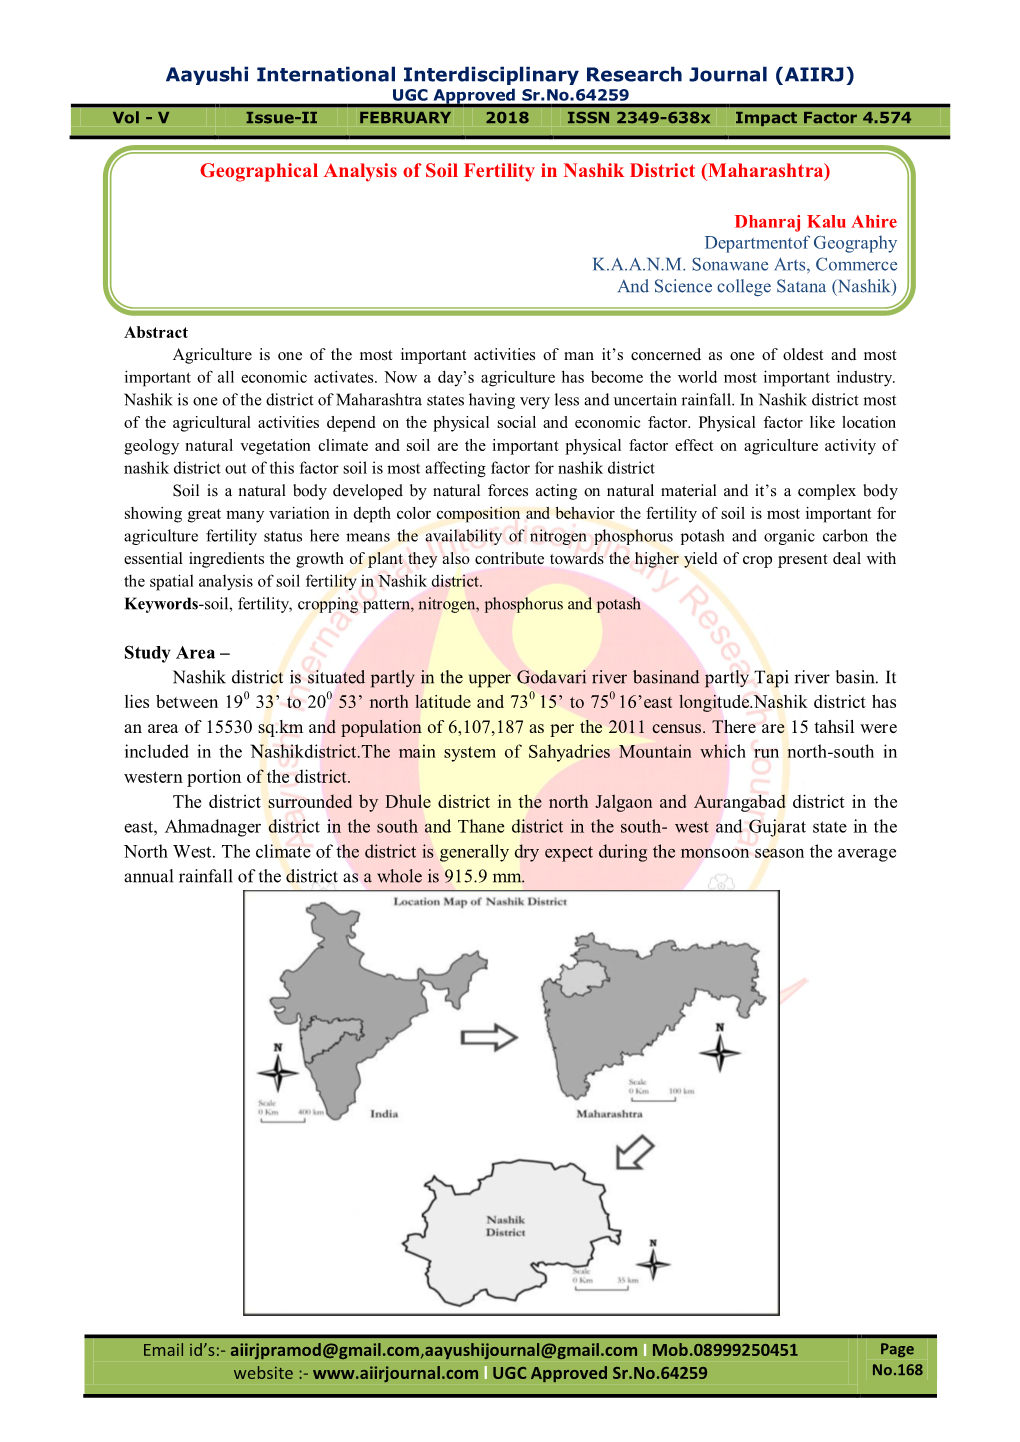 Geographical Analysis of Soil Fertility in Nashik District (Maharashtra)